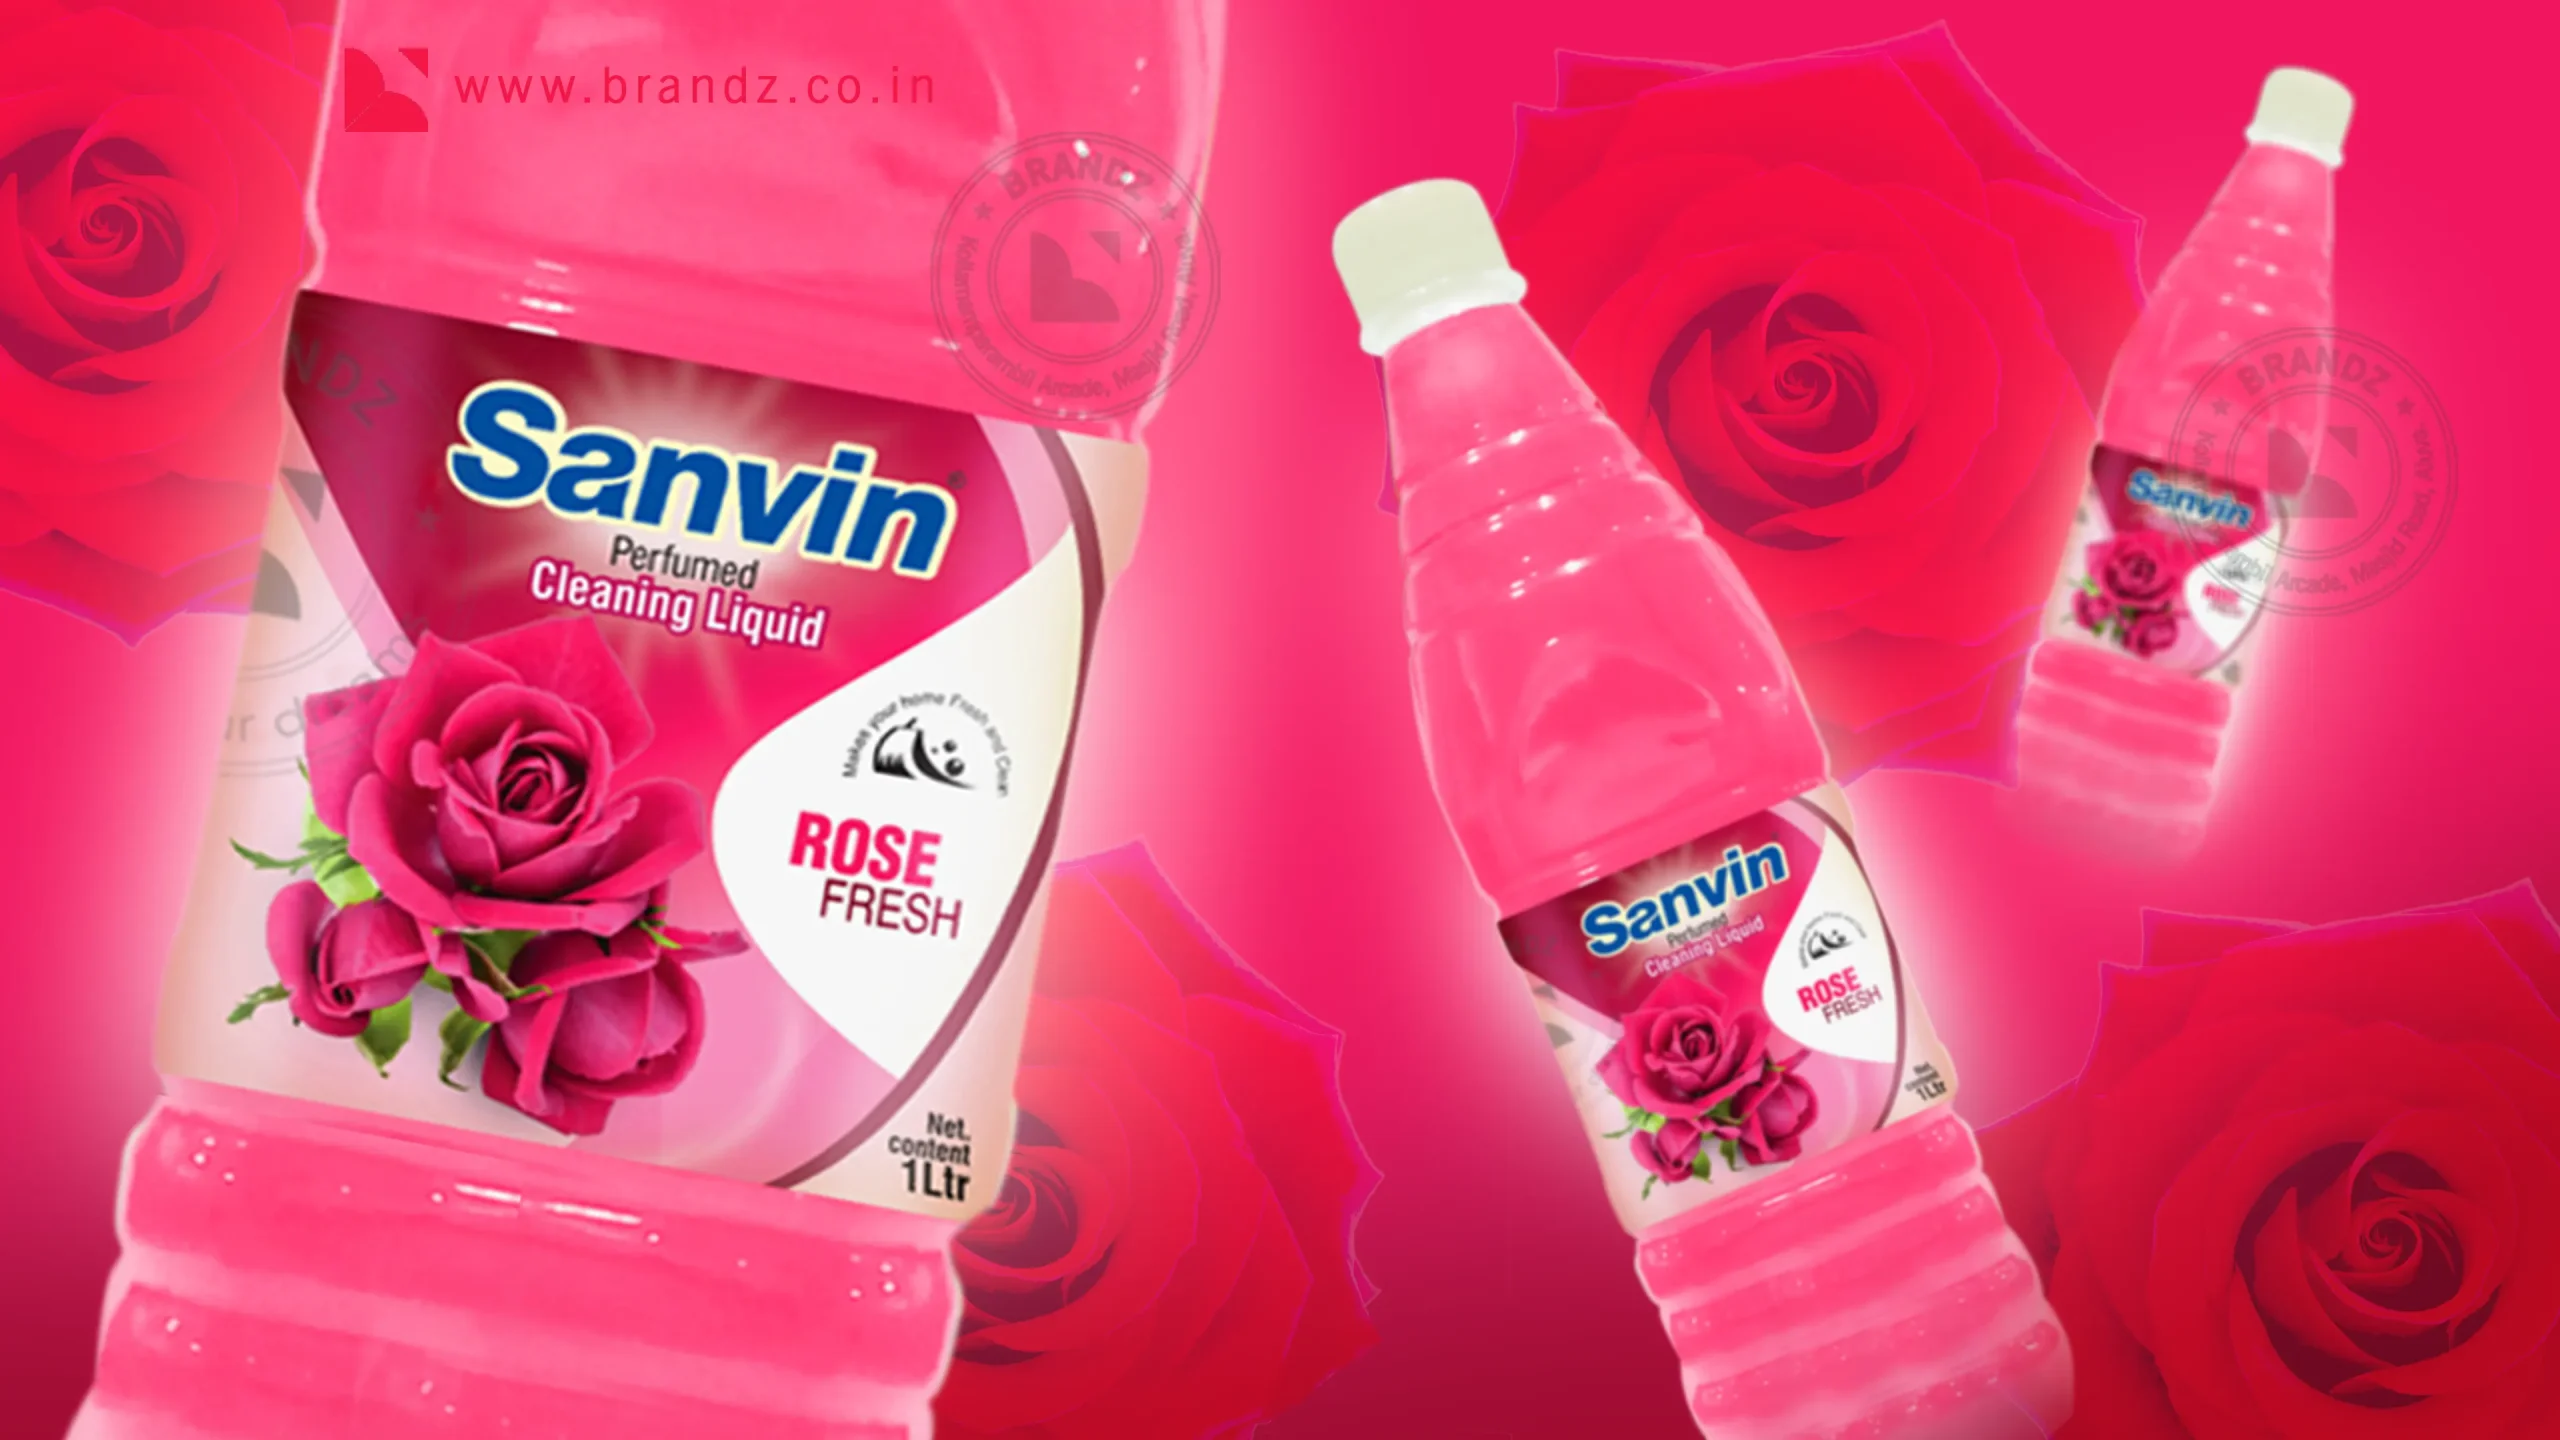 Sanvin Perfumed Cleaning Liquid Label